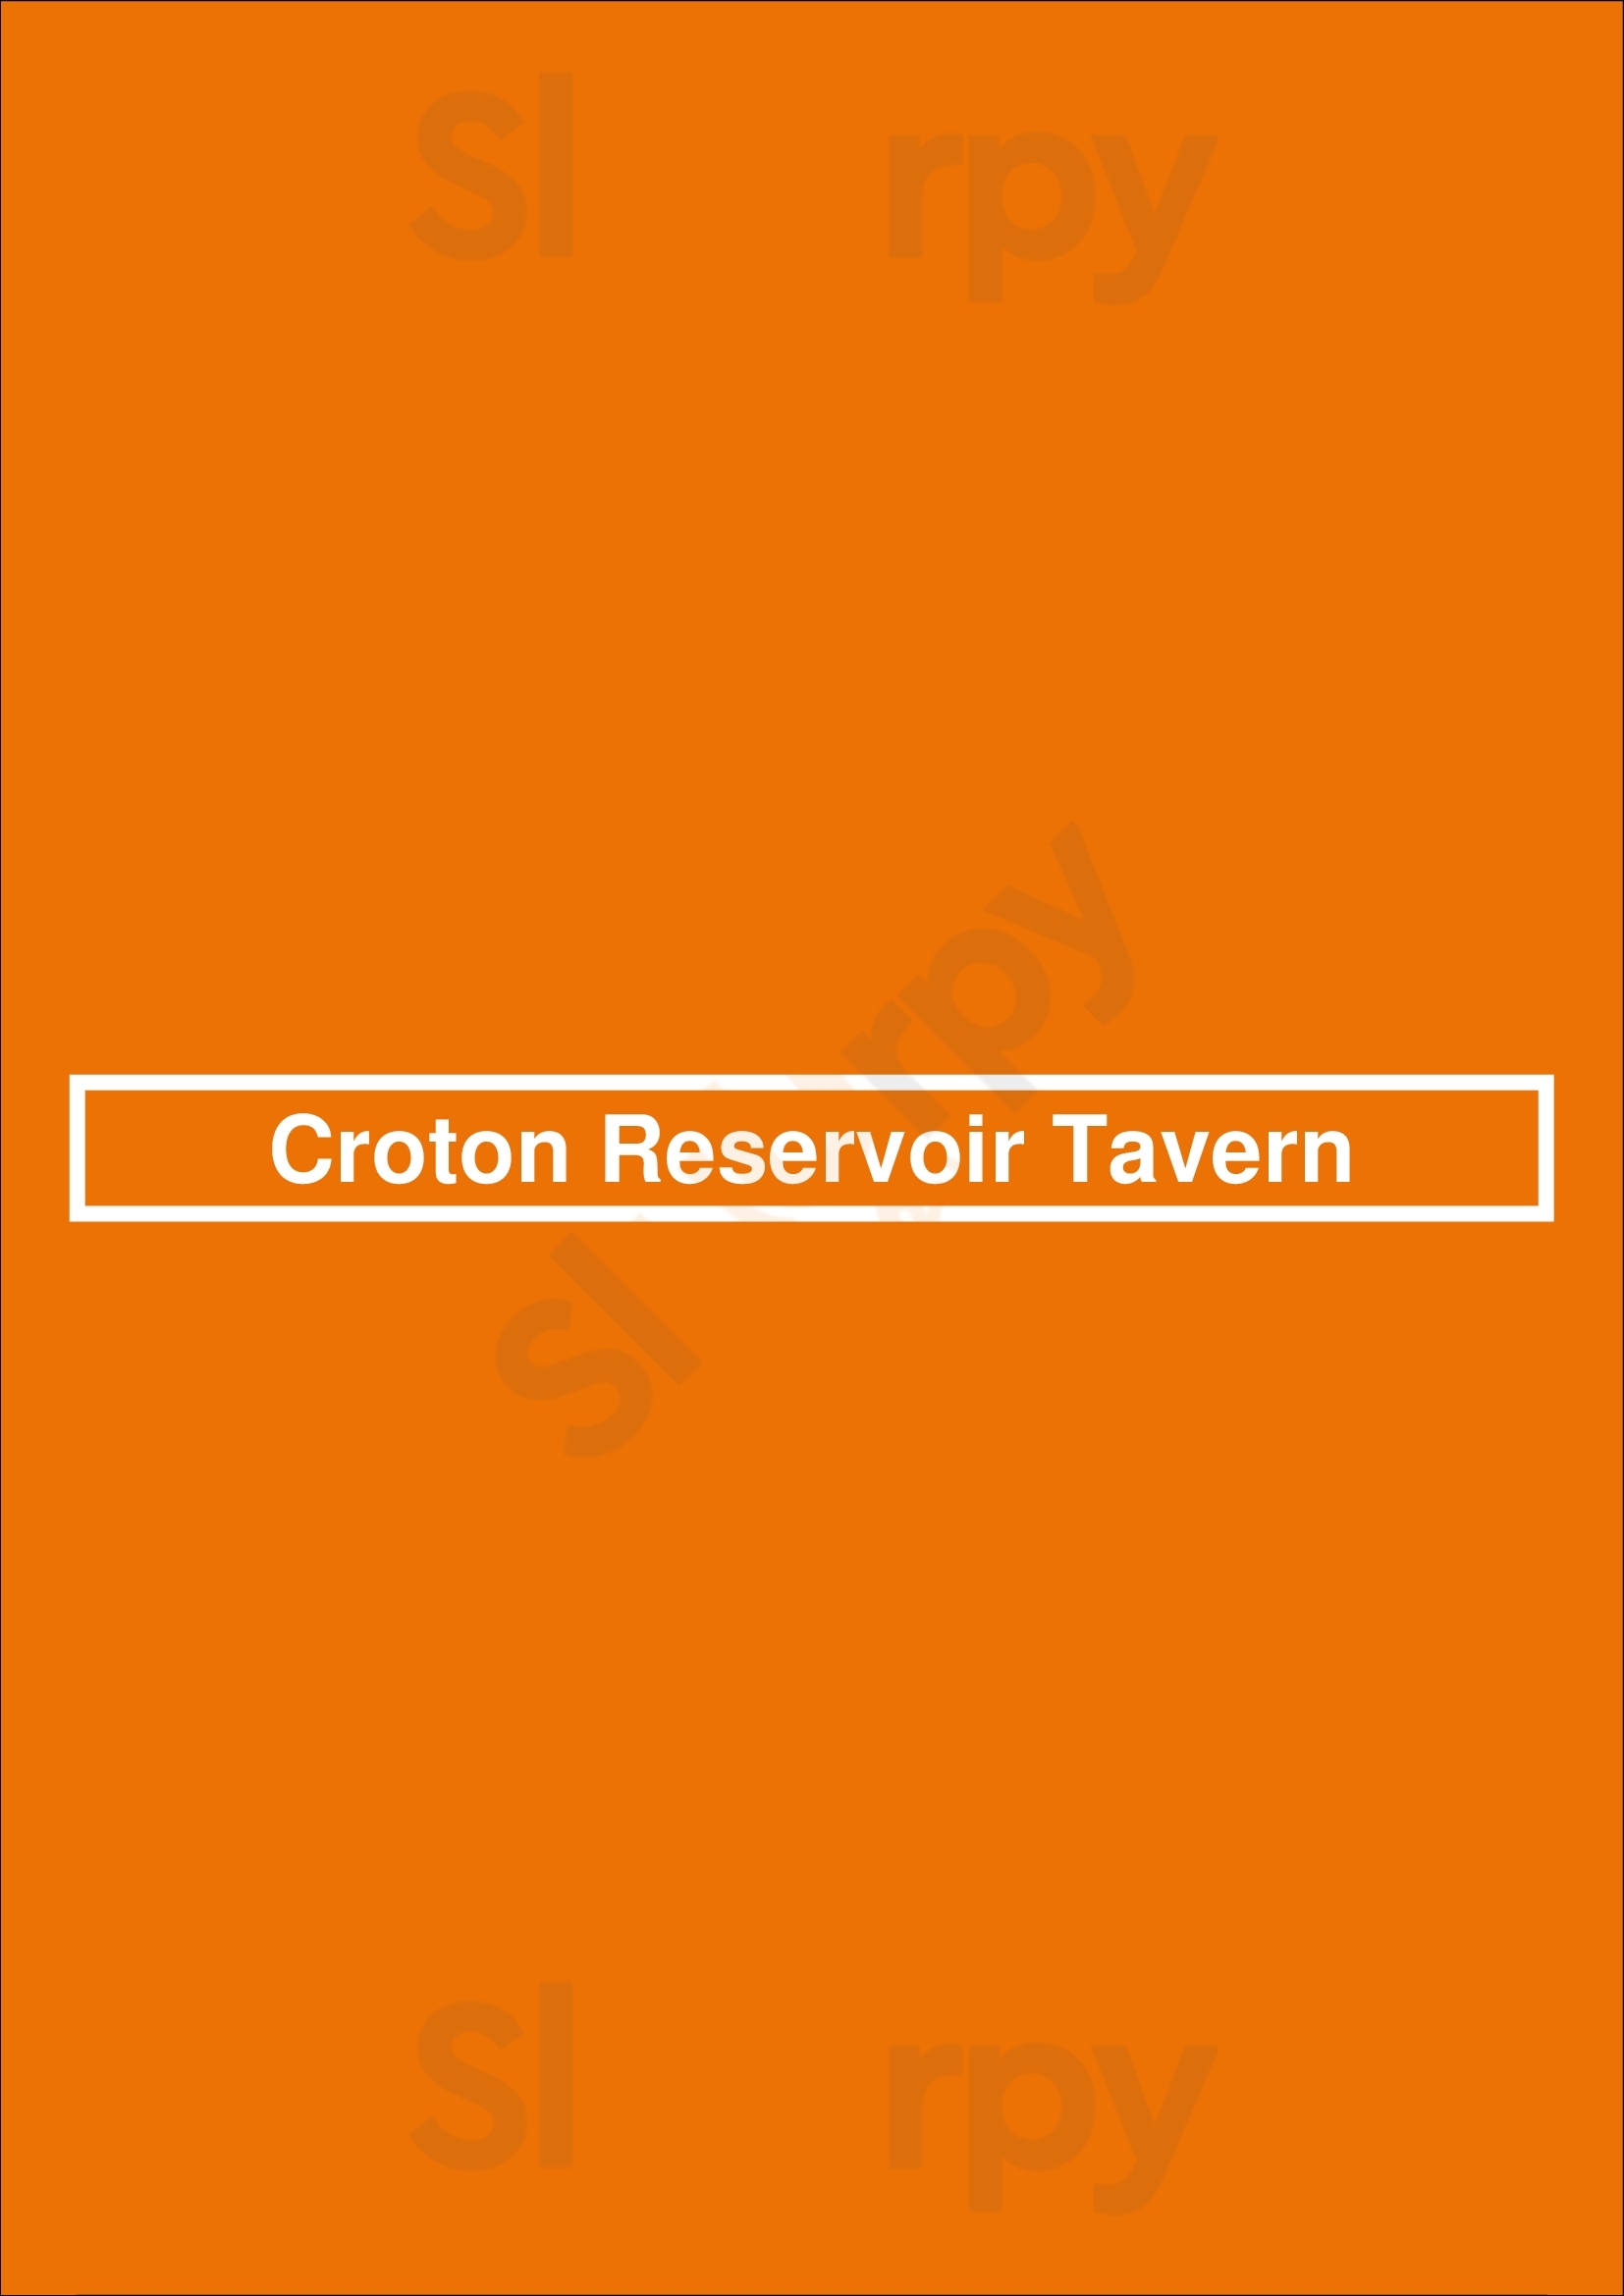 Croton Reservoir Tavern New York City Menu - 1